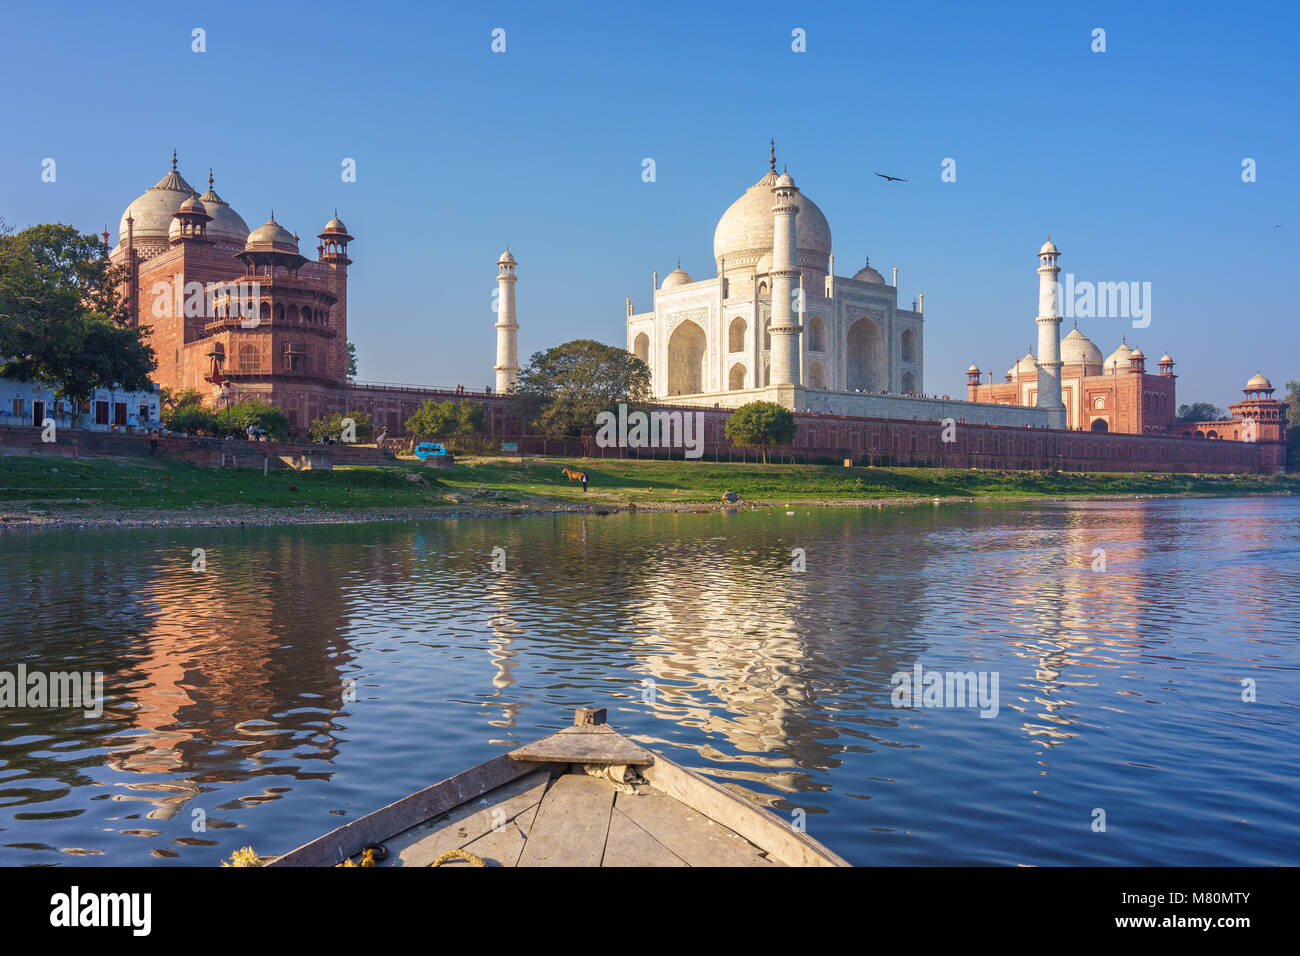 Boat ride on Yamuna river near Taj Mahal Stock Photo